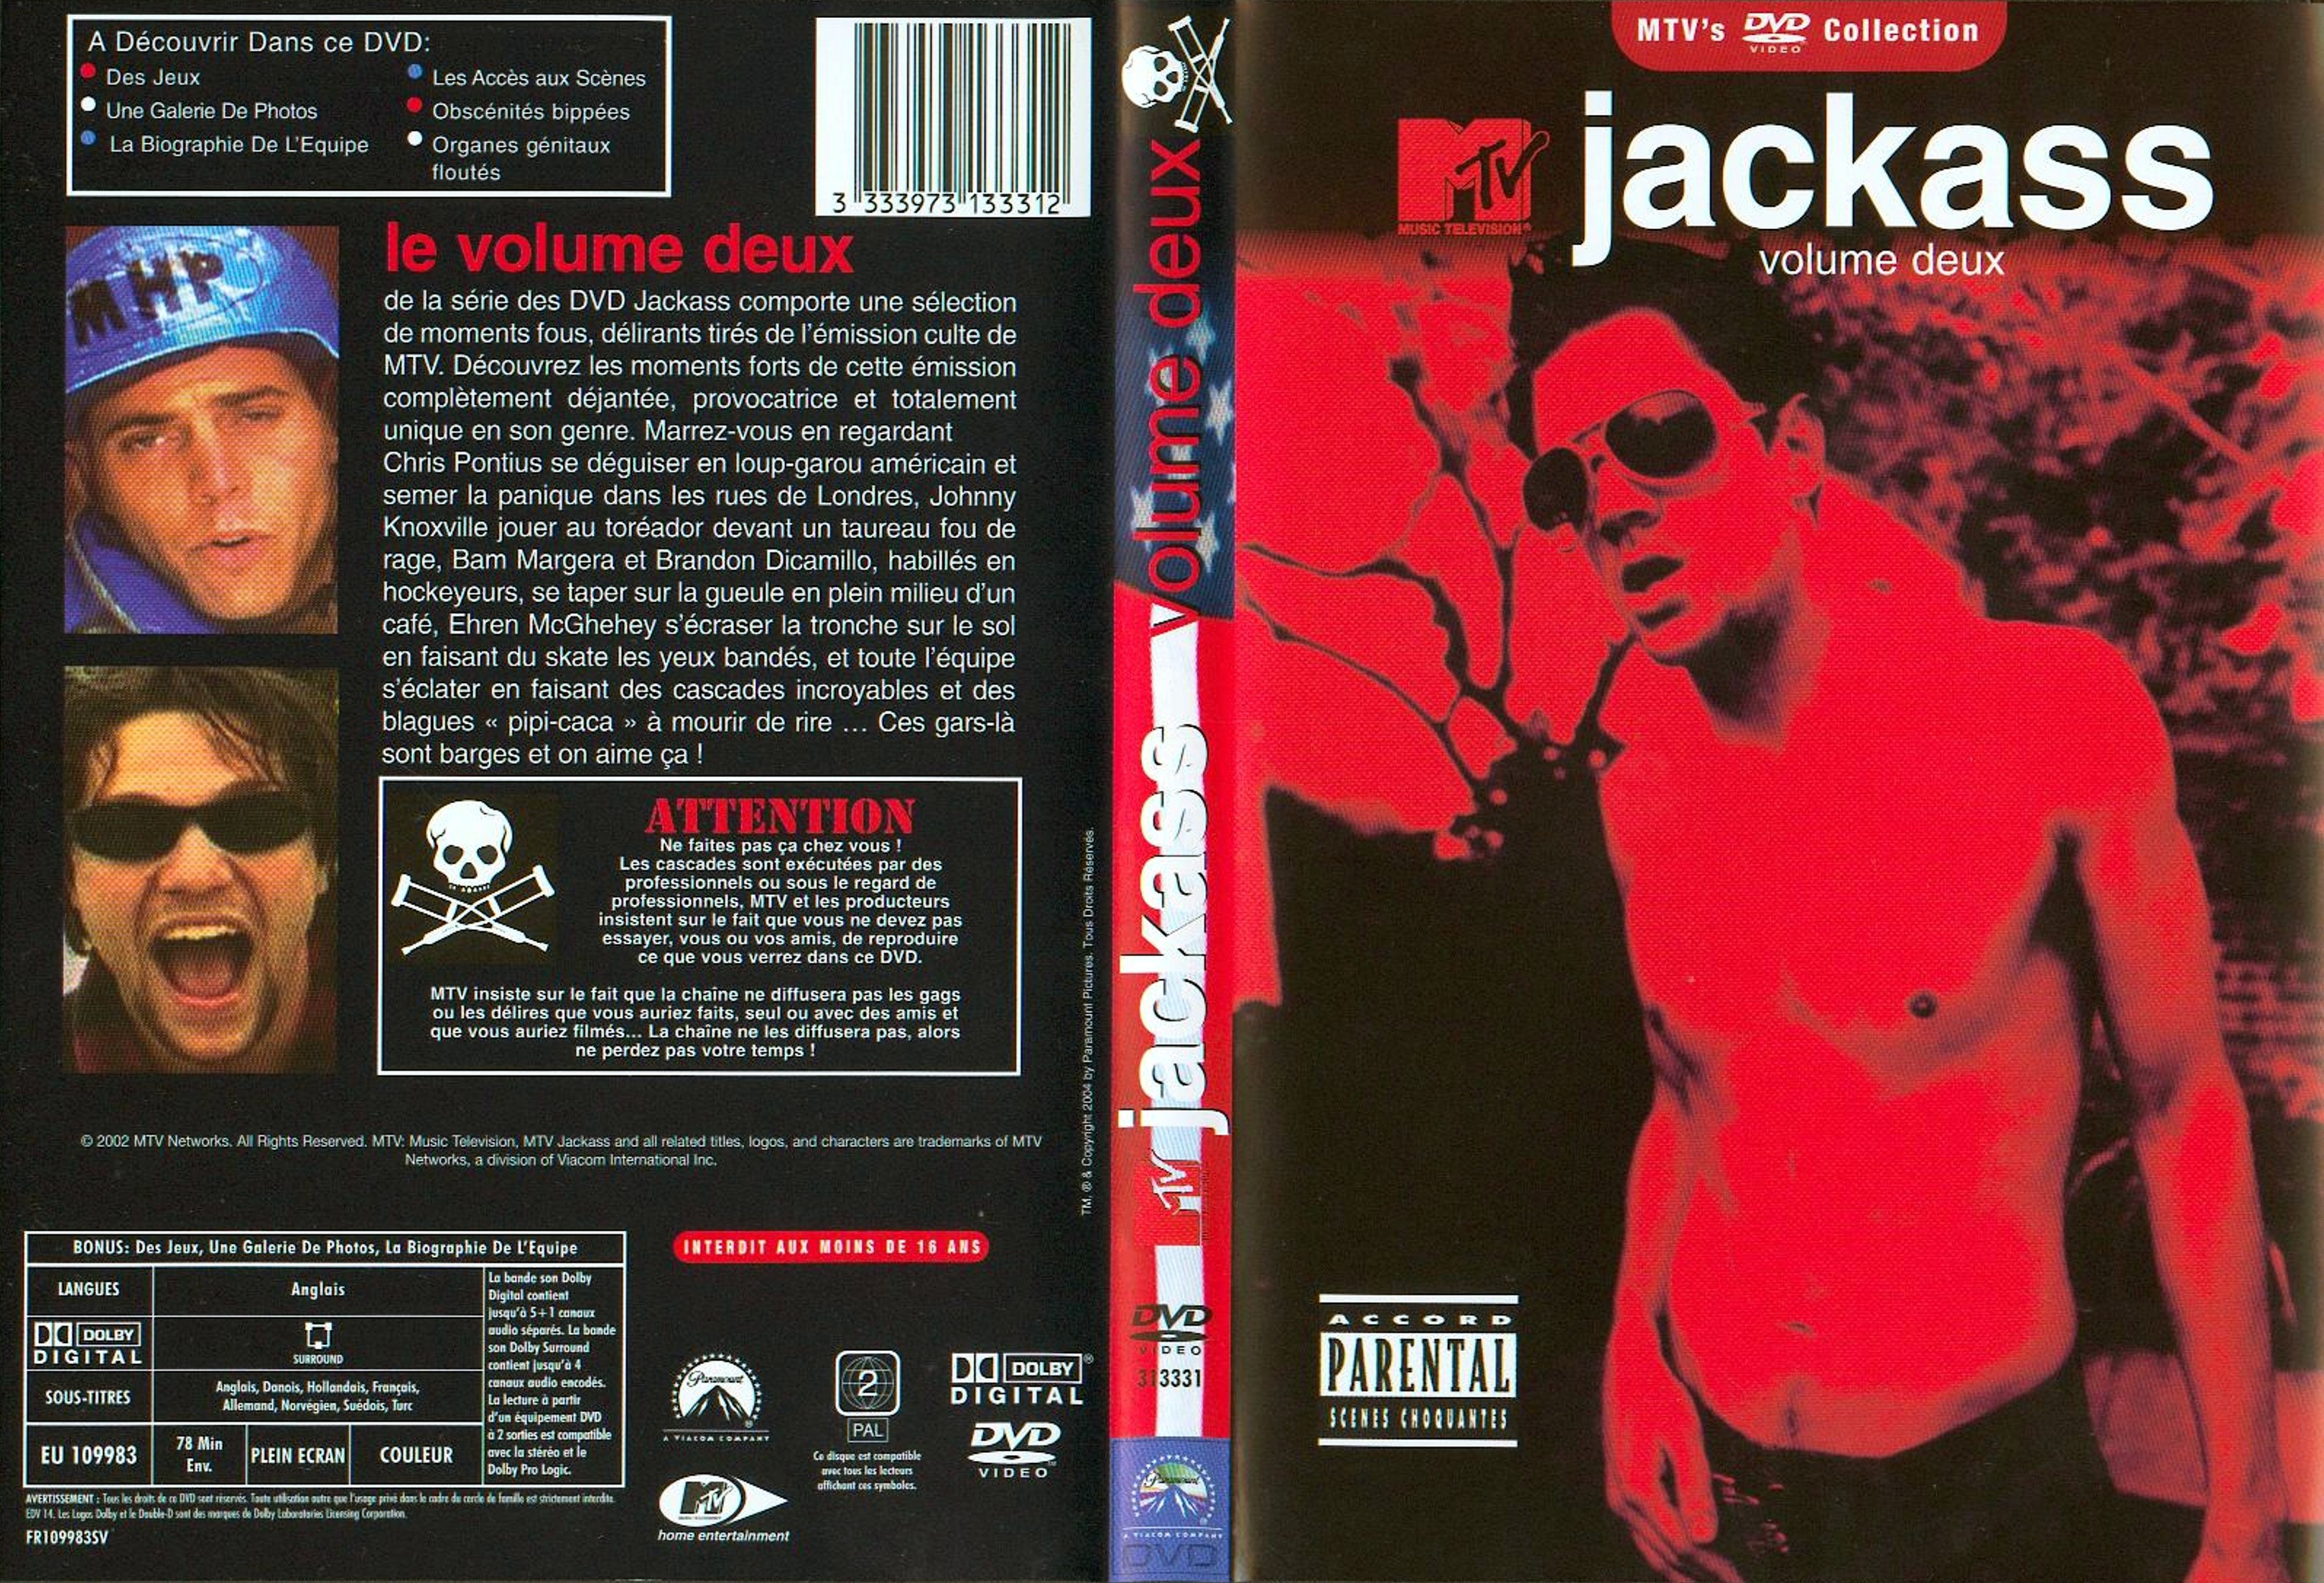 Jaquette DVD Jackass vol 2 v2